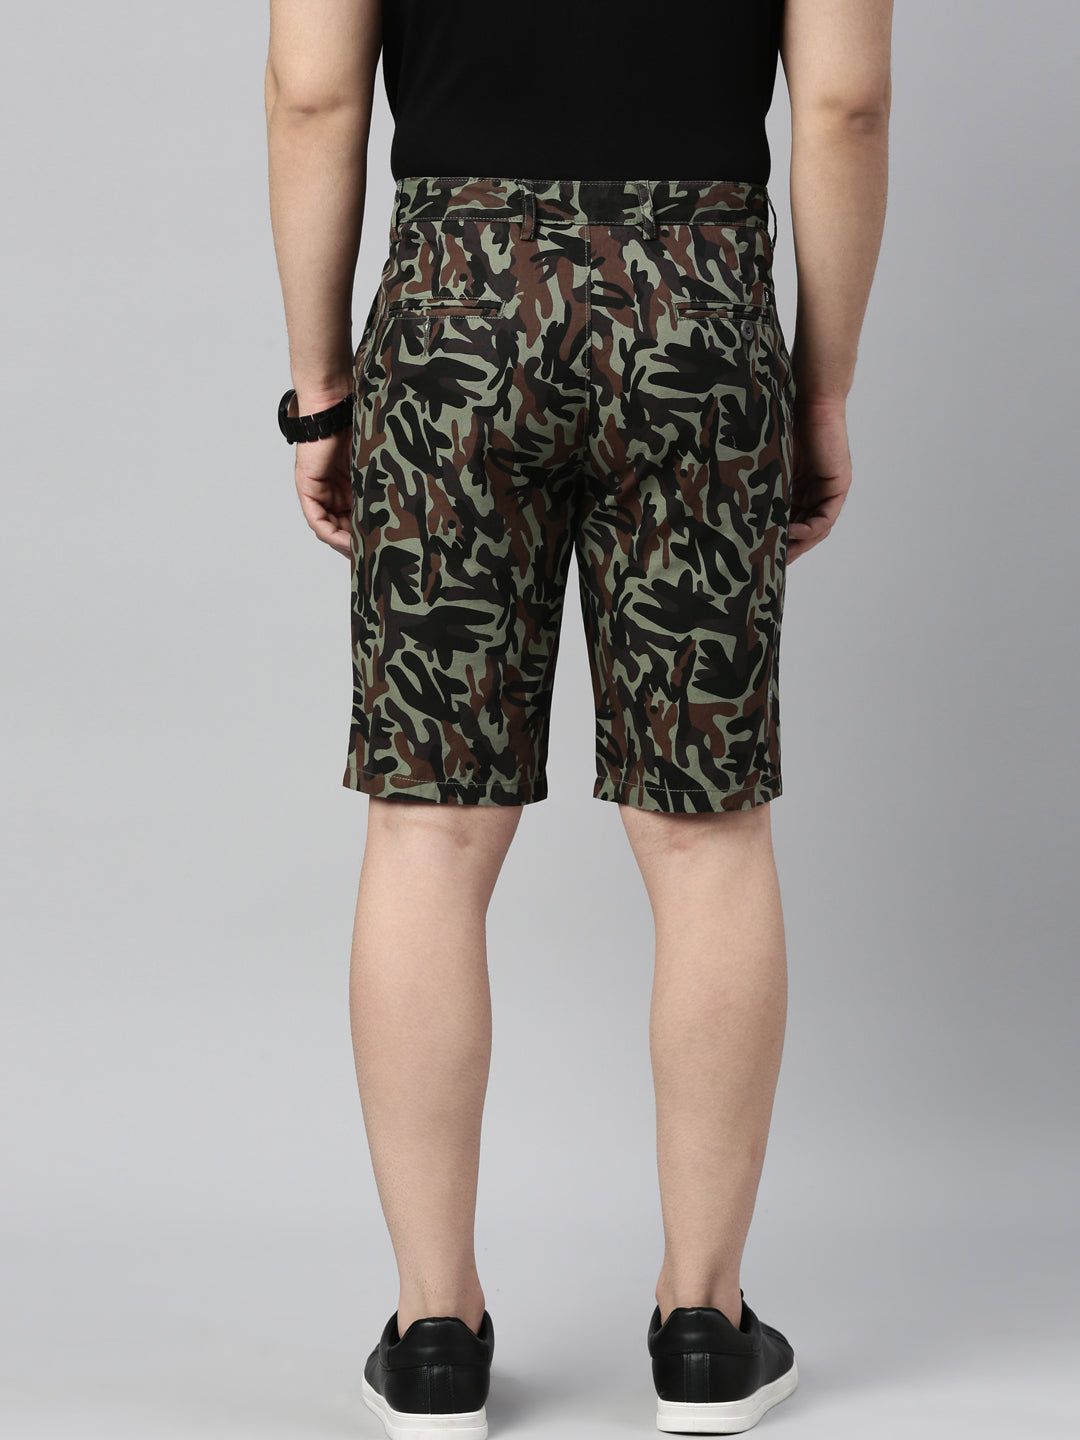 Sage Green Camouflage Shorts Men's Shorts Bushirt   